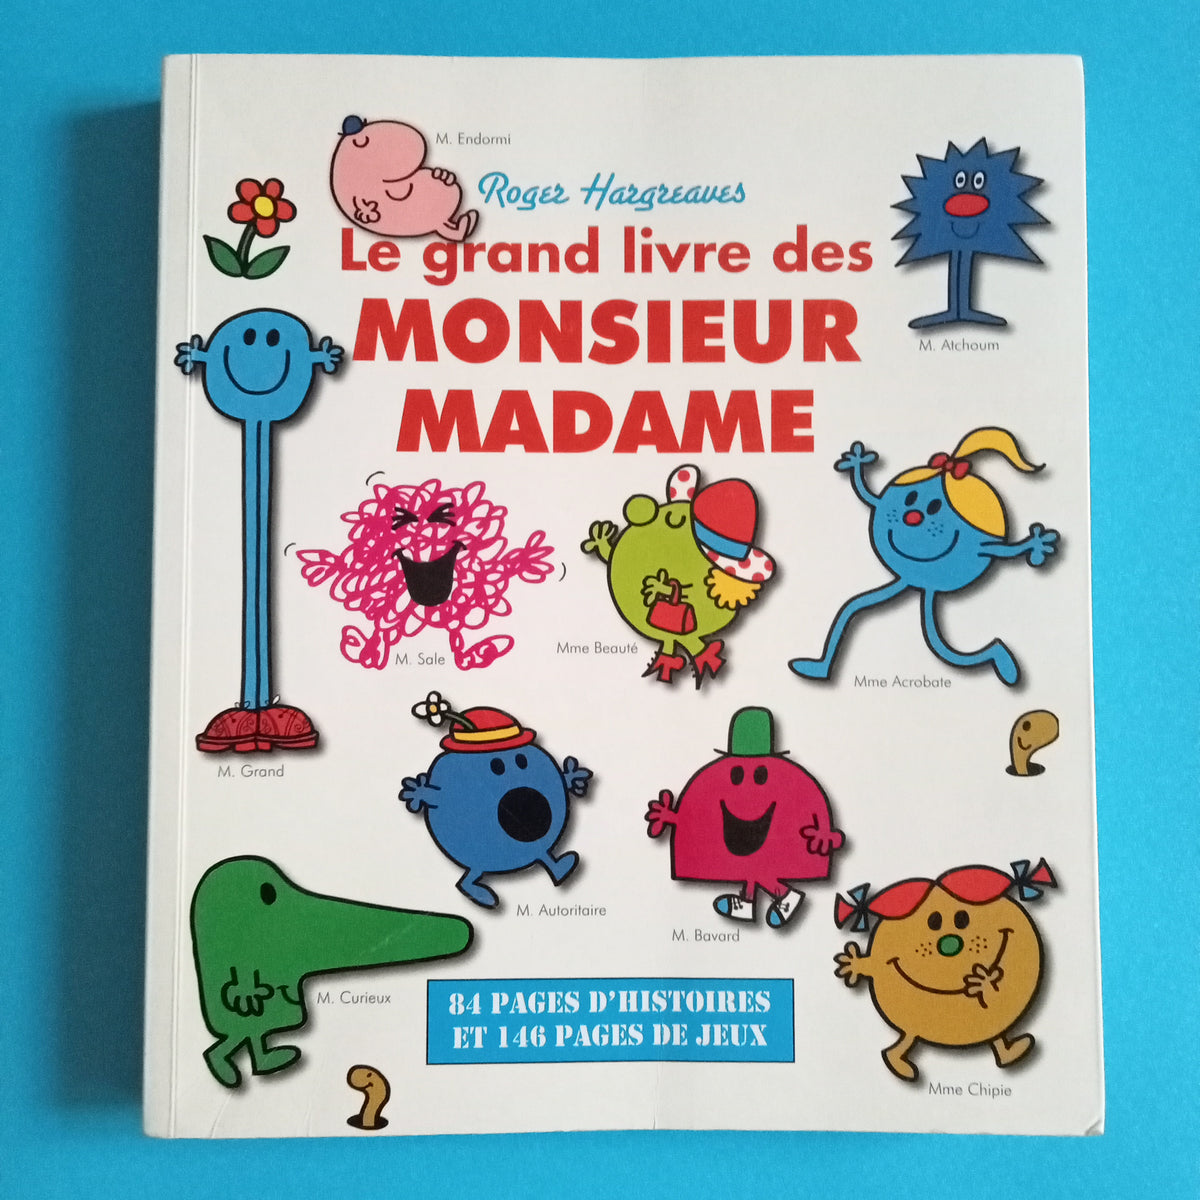 Monsieur Madame - Livre CD M. Gentil - Hargreaves, Roger 